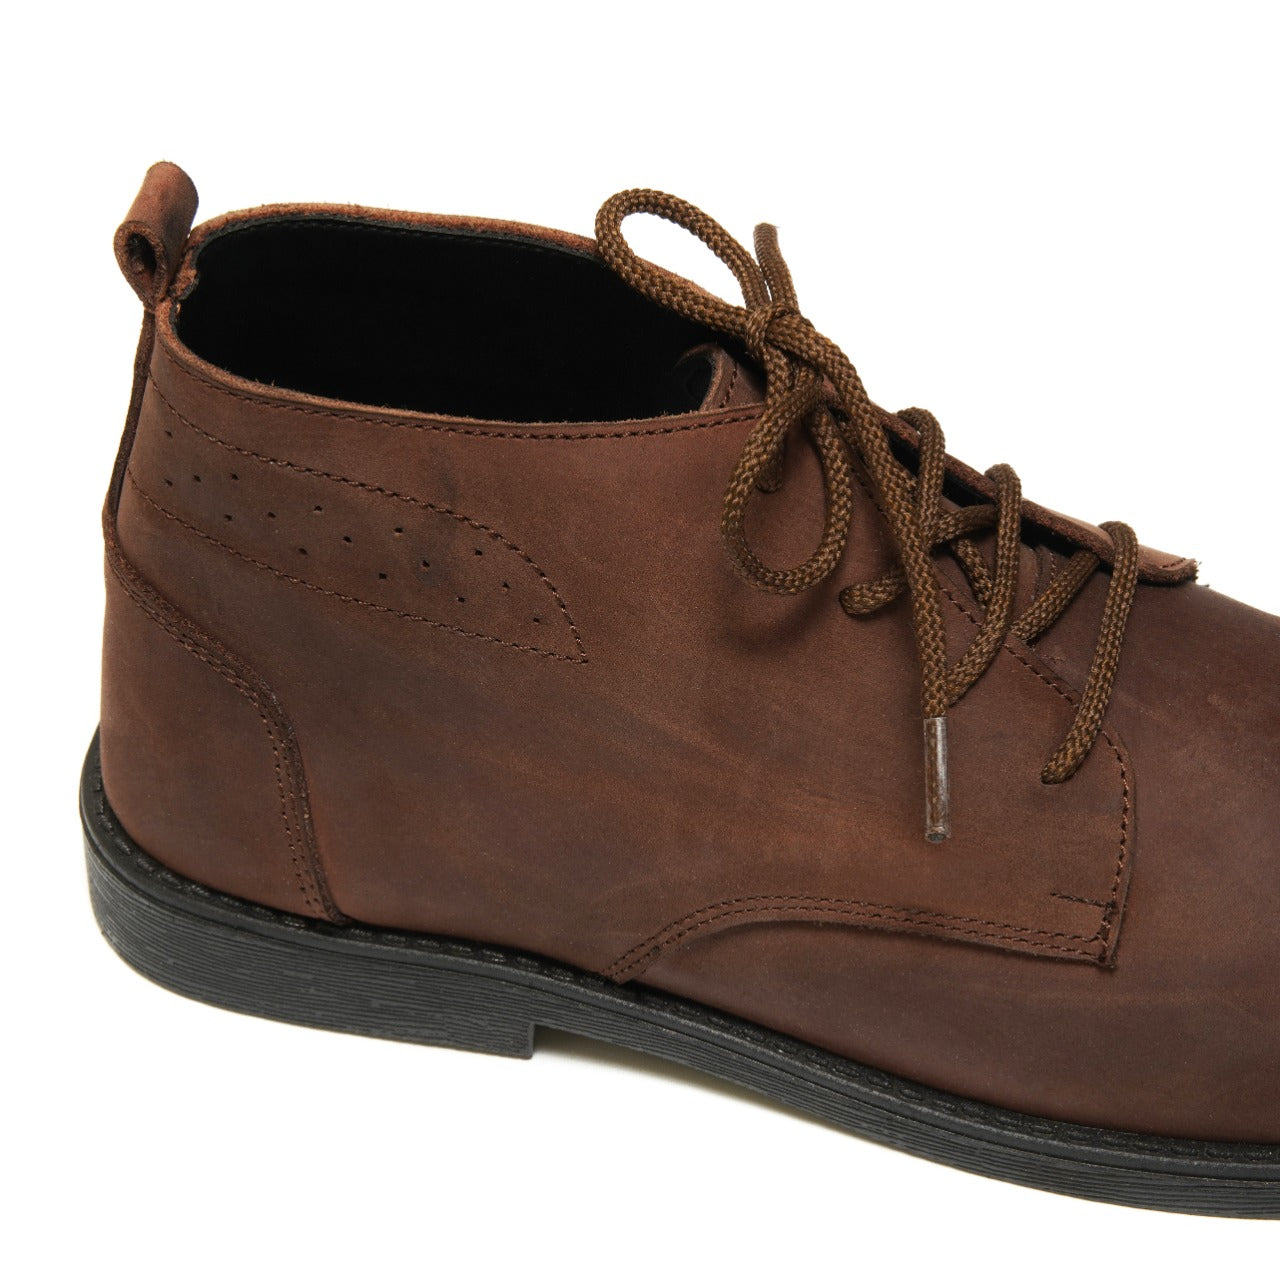 SKU:1003-Oily Cow Leather Chukka boots